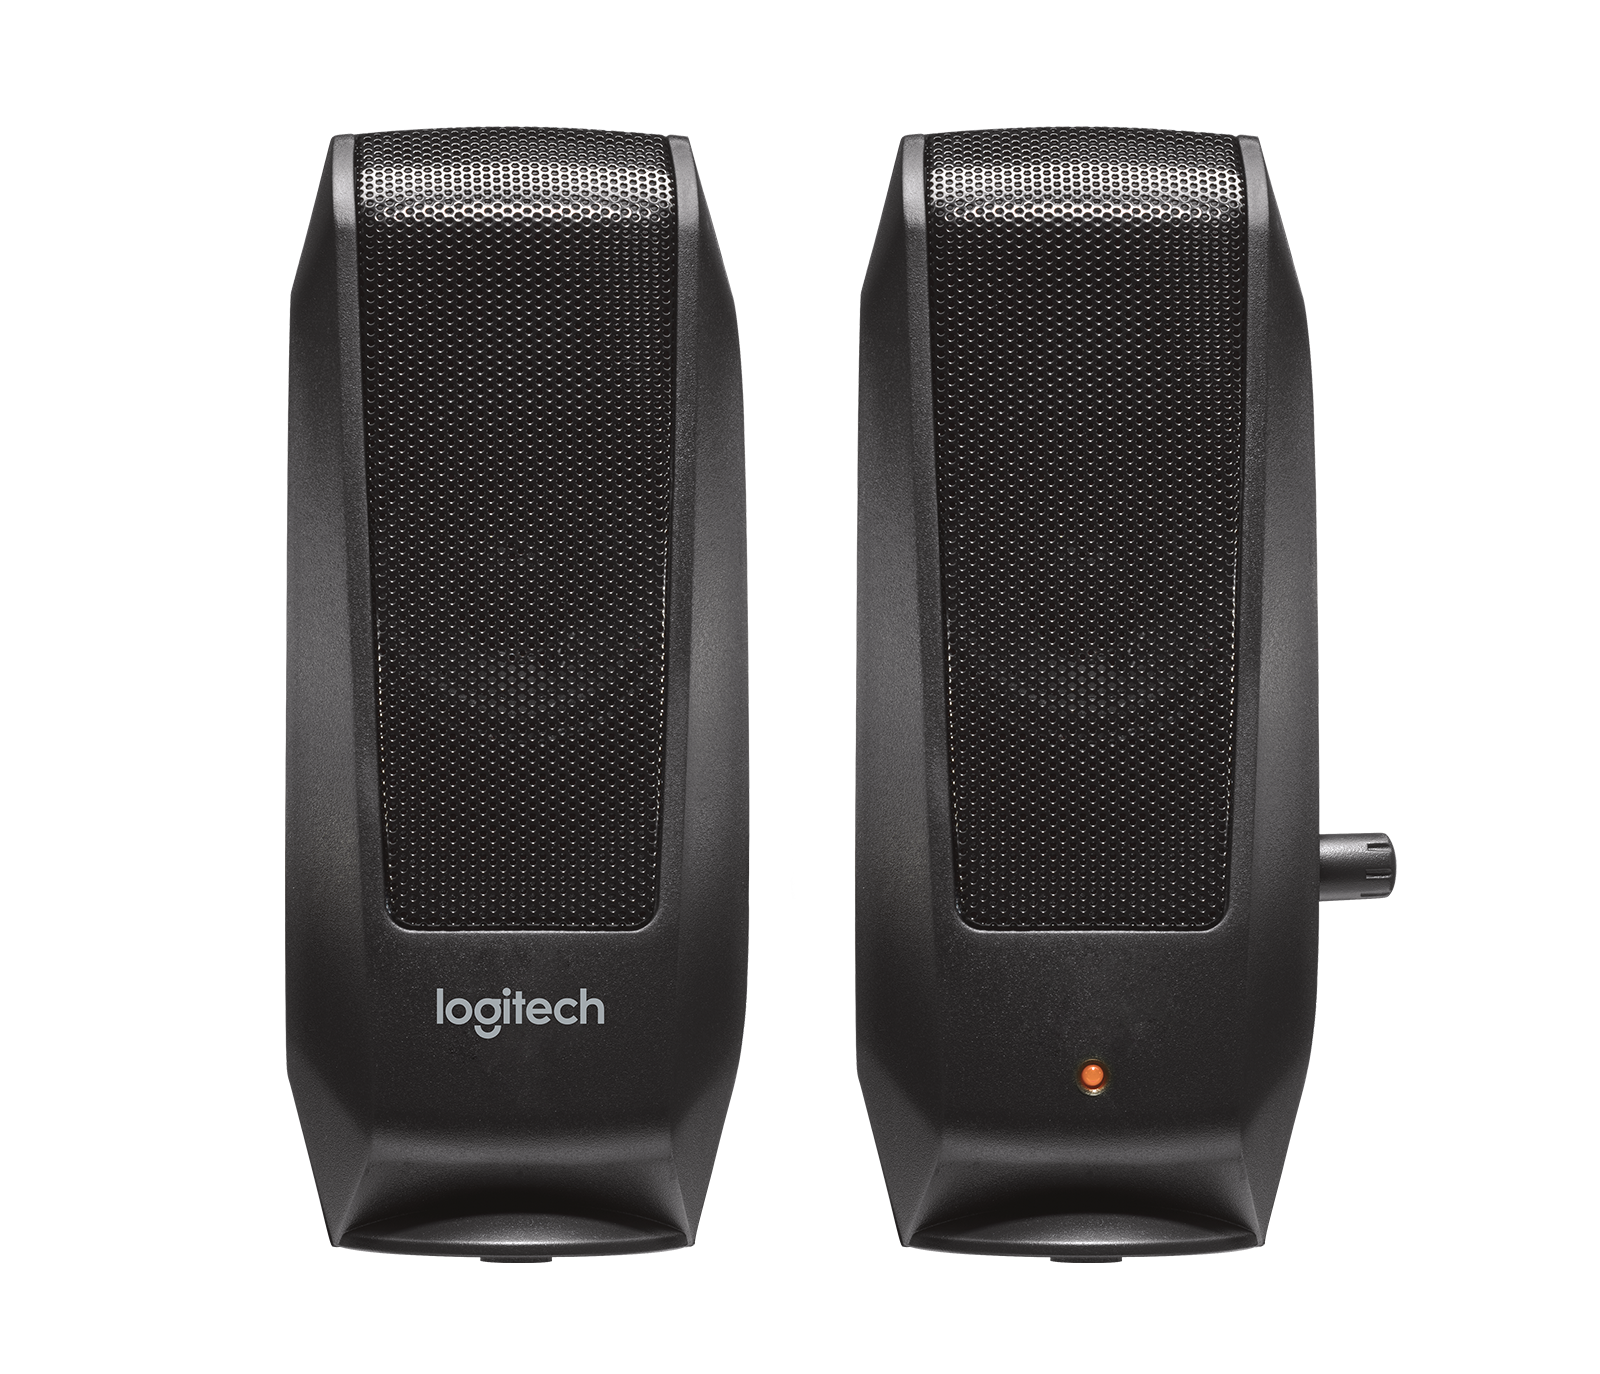 Logitech S120 Lightweight Stereo Speakers in a Slim Design